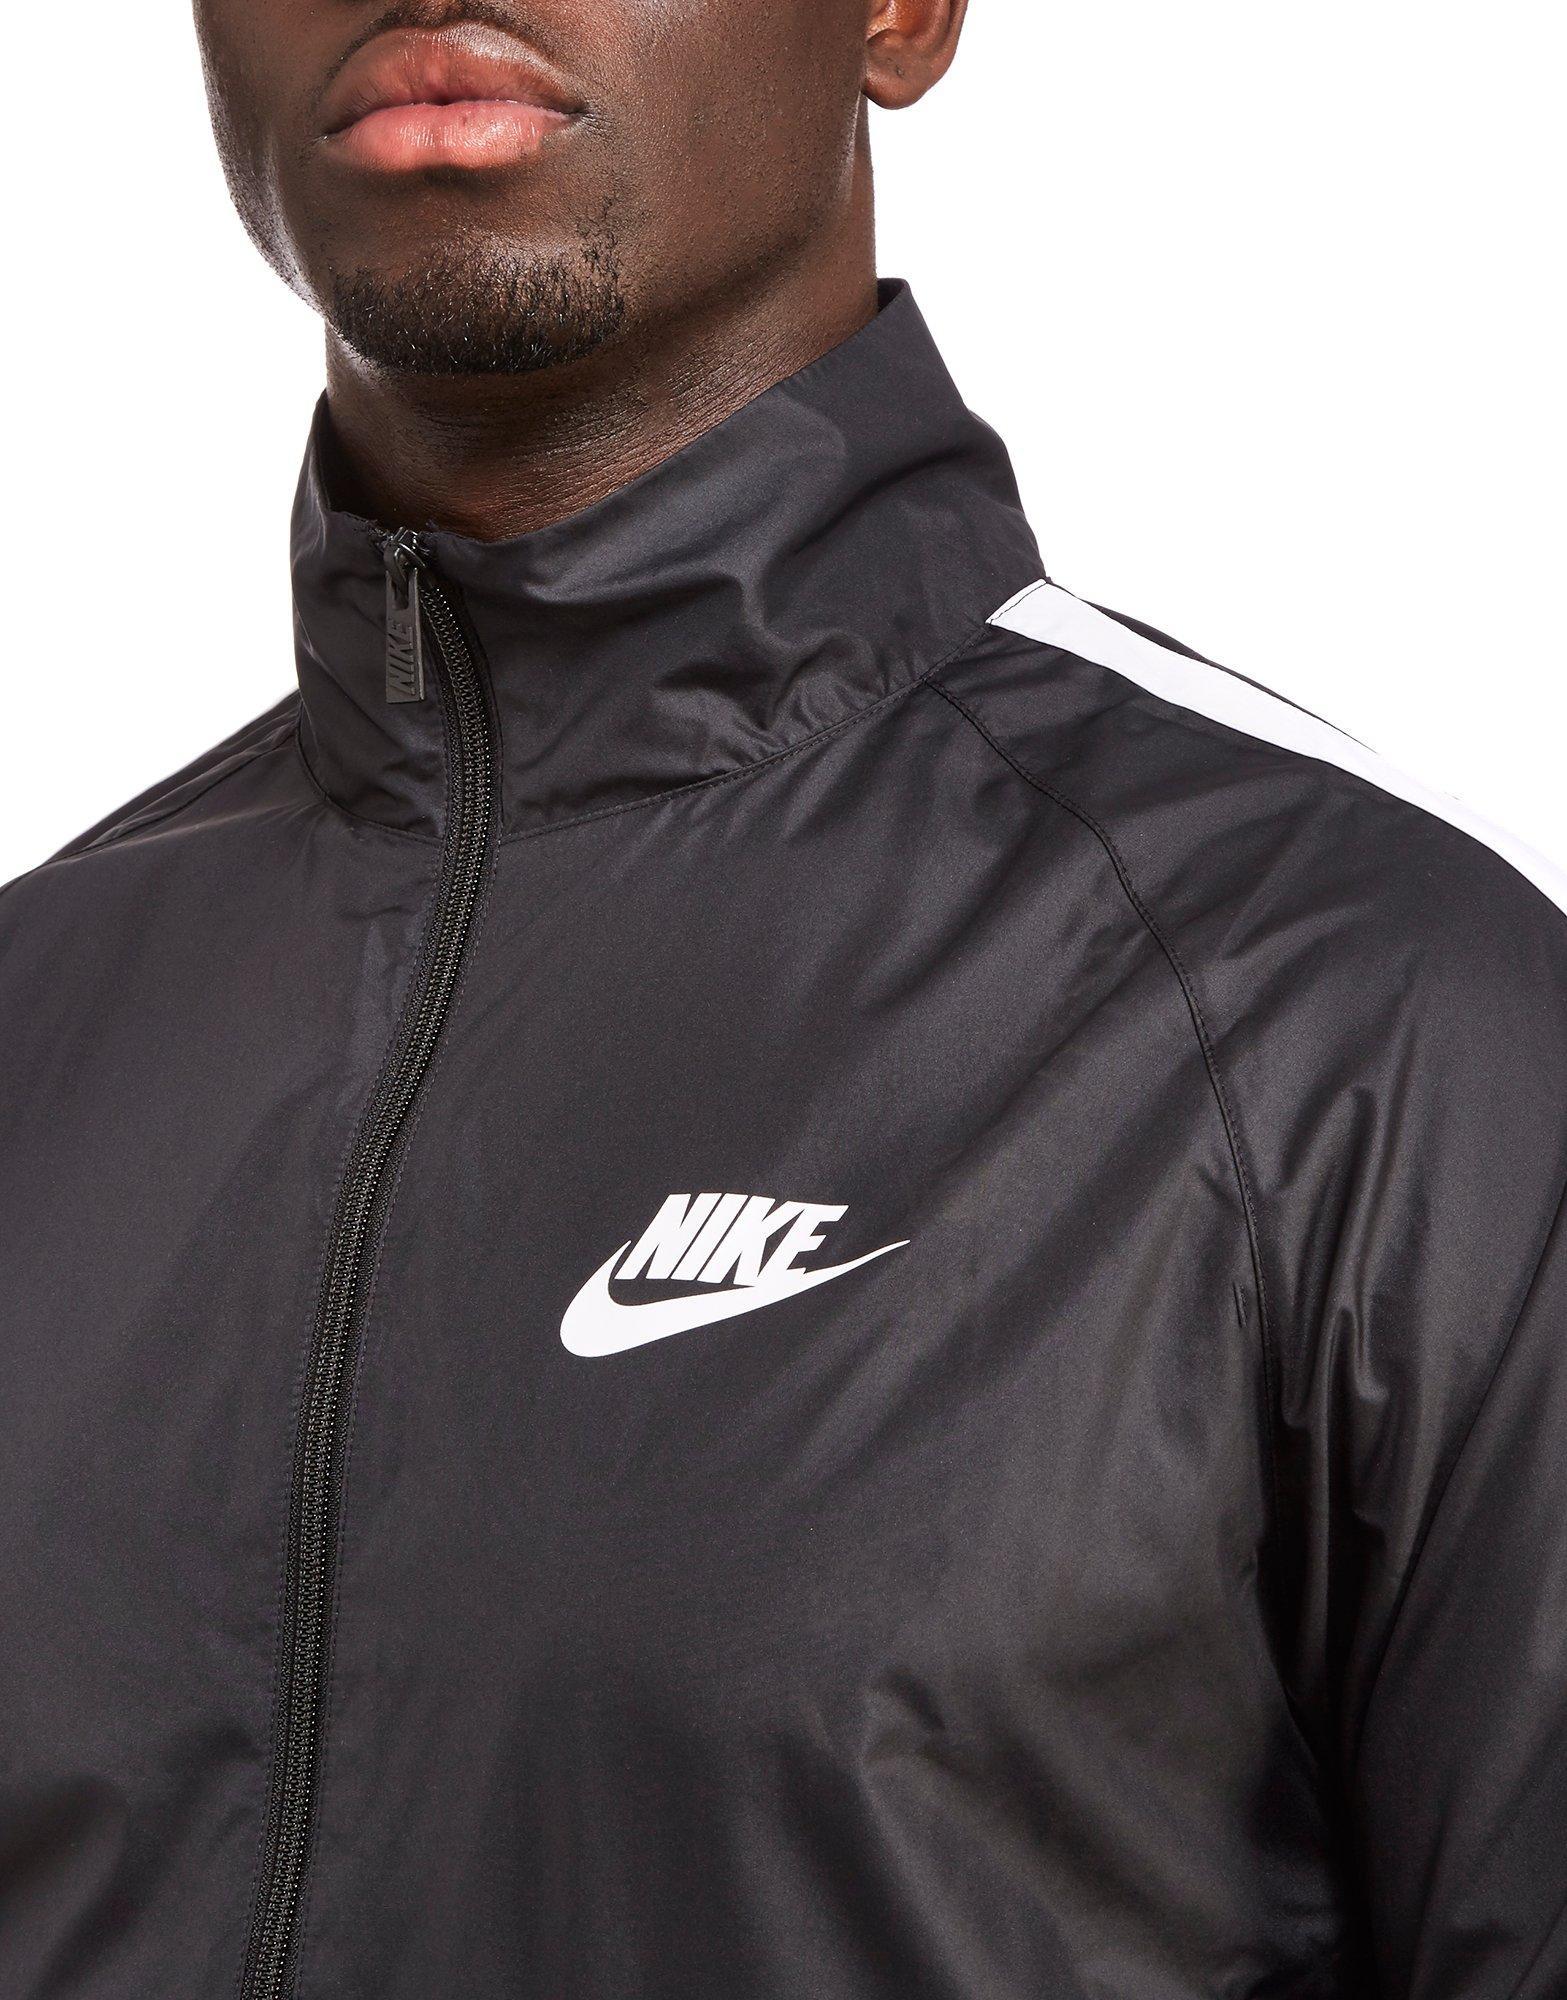 Nike Synthetic Season Woven Tracksuit in Black/White (Black) for Men - Lyst